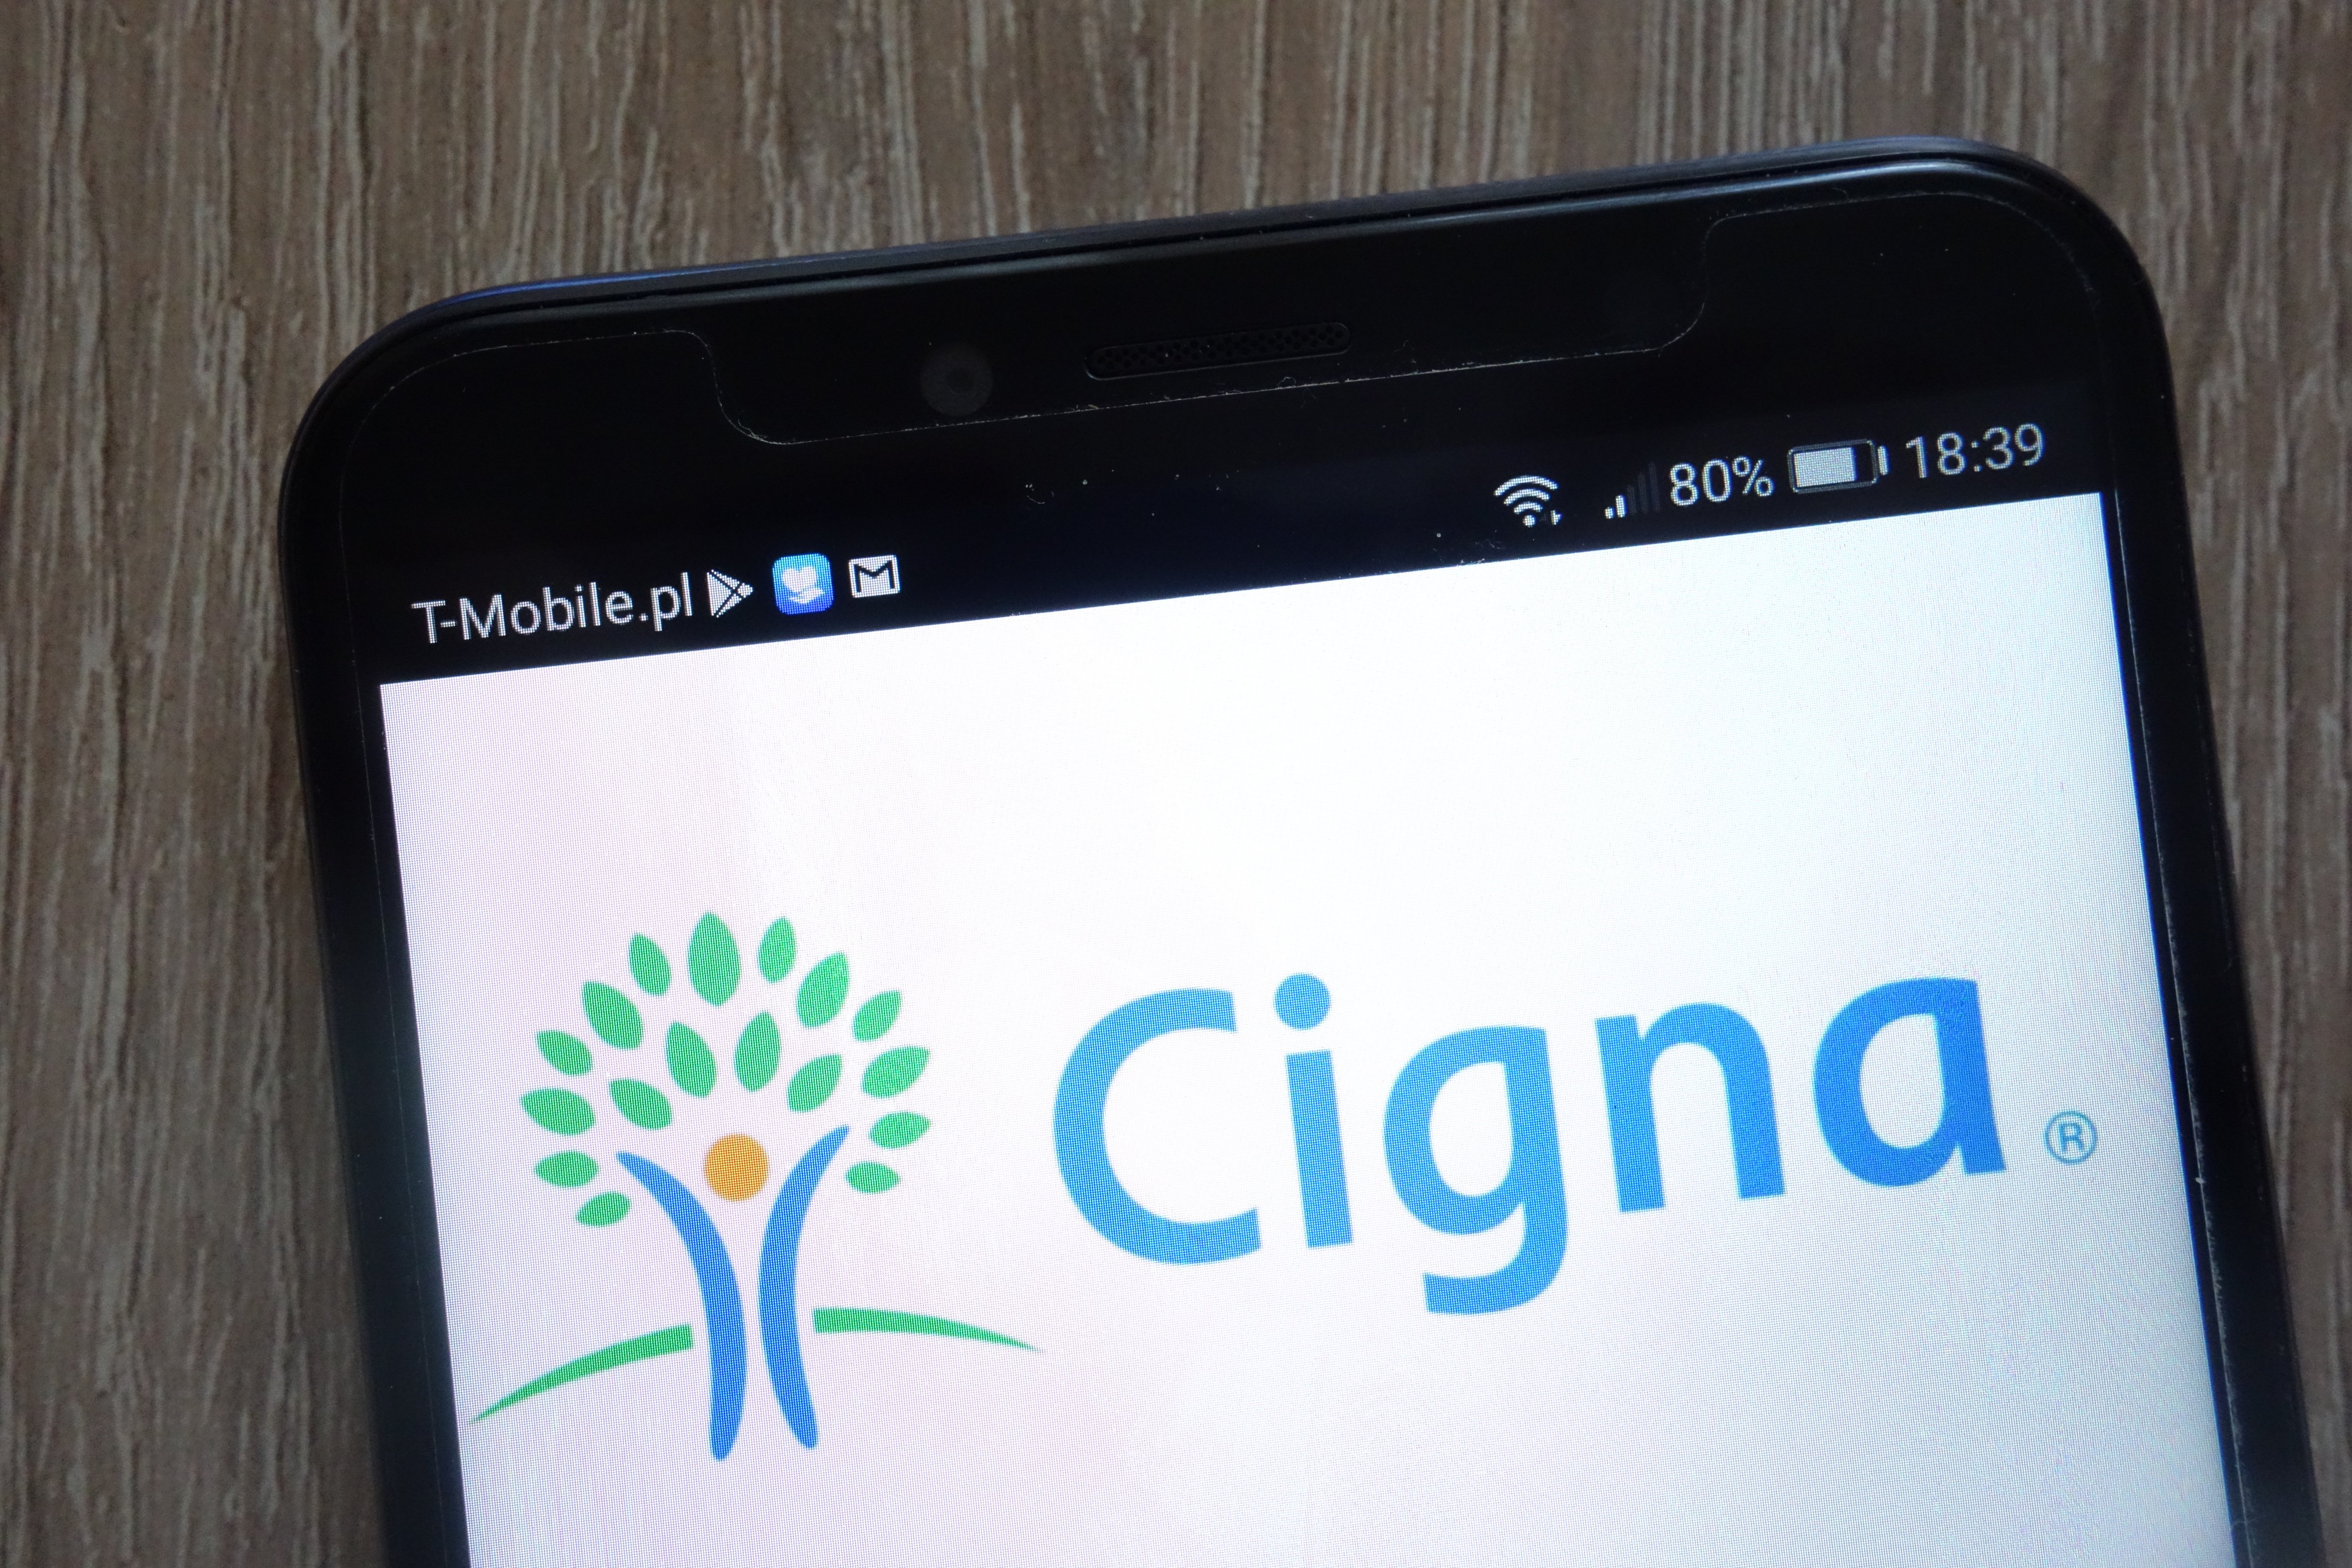 Cigna open access plus telehealth accenture denver